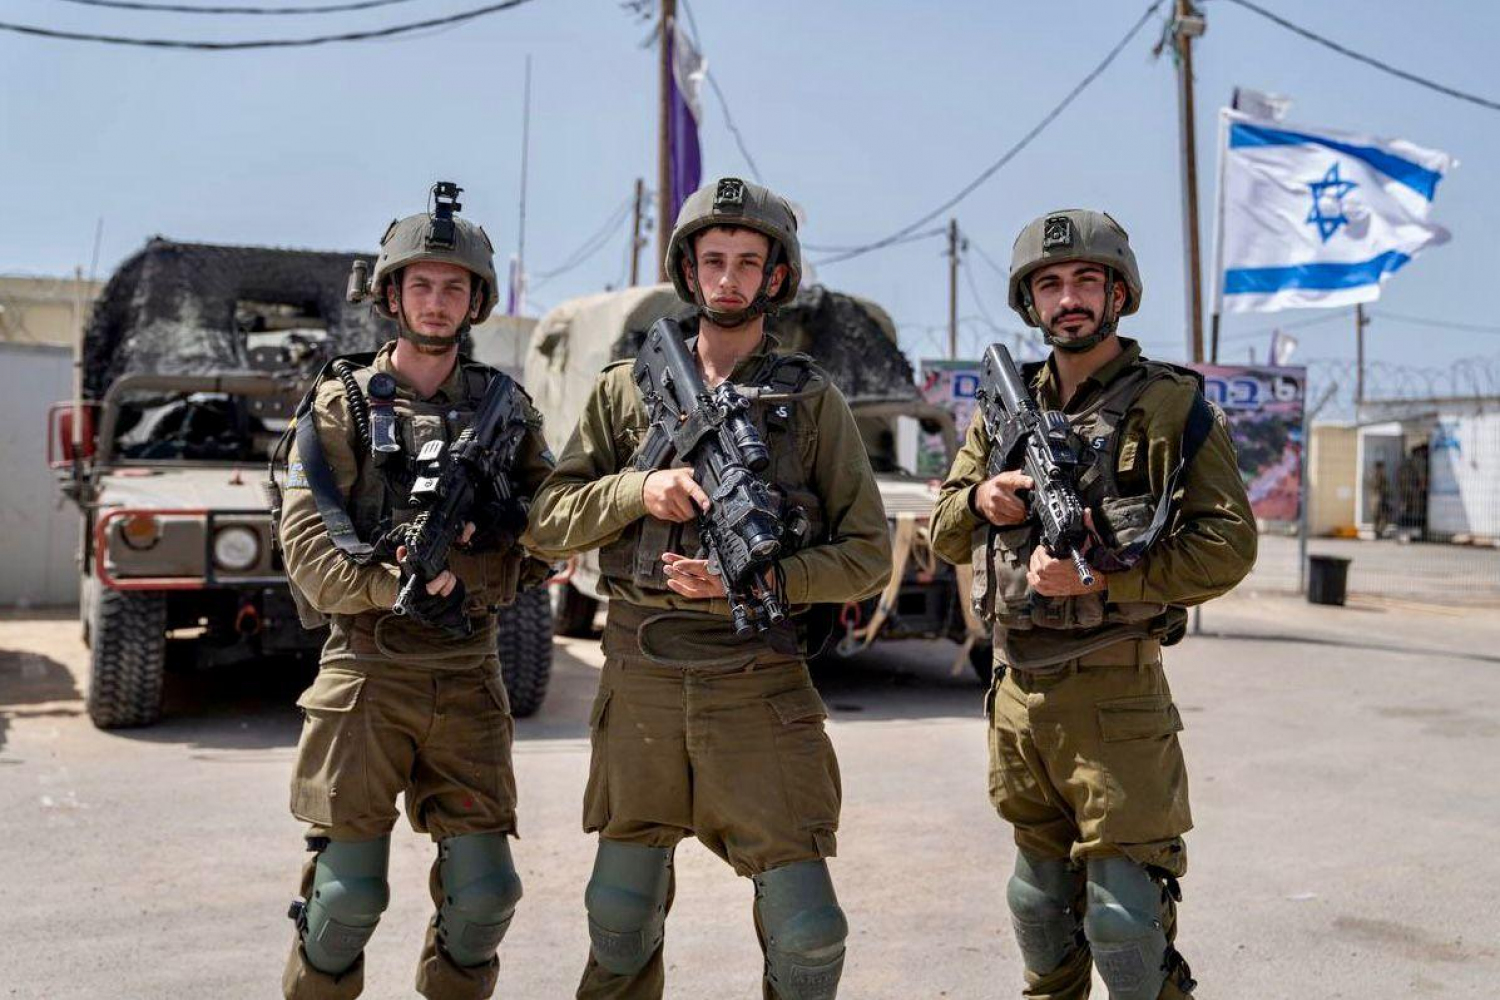 IDF Spokesperson's Unit / CC BY-SA 3.0